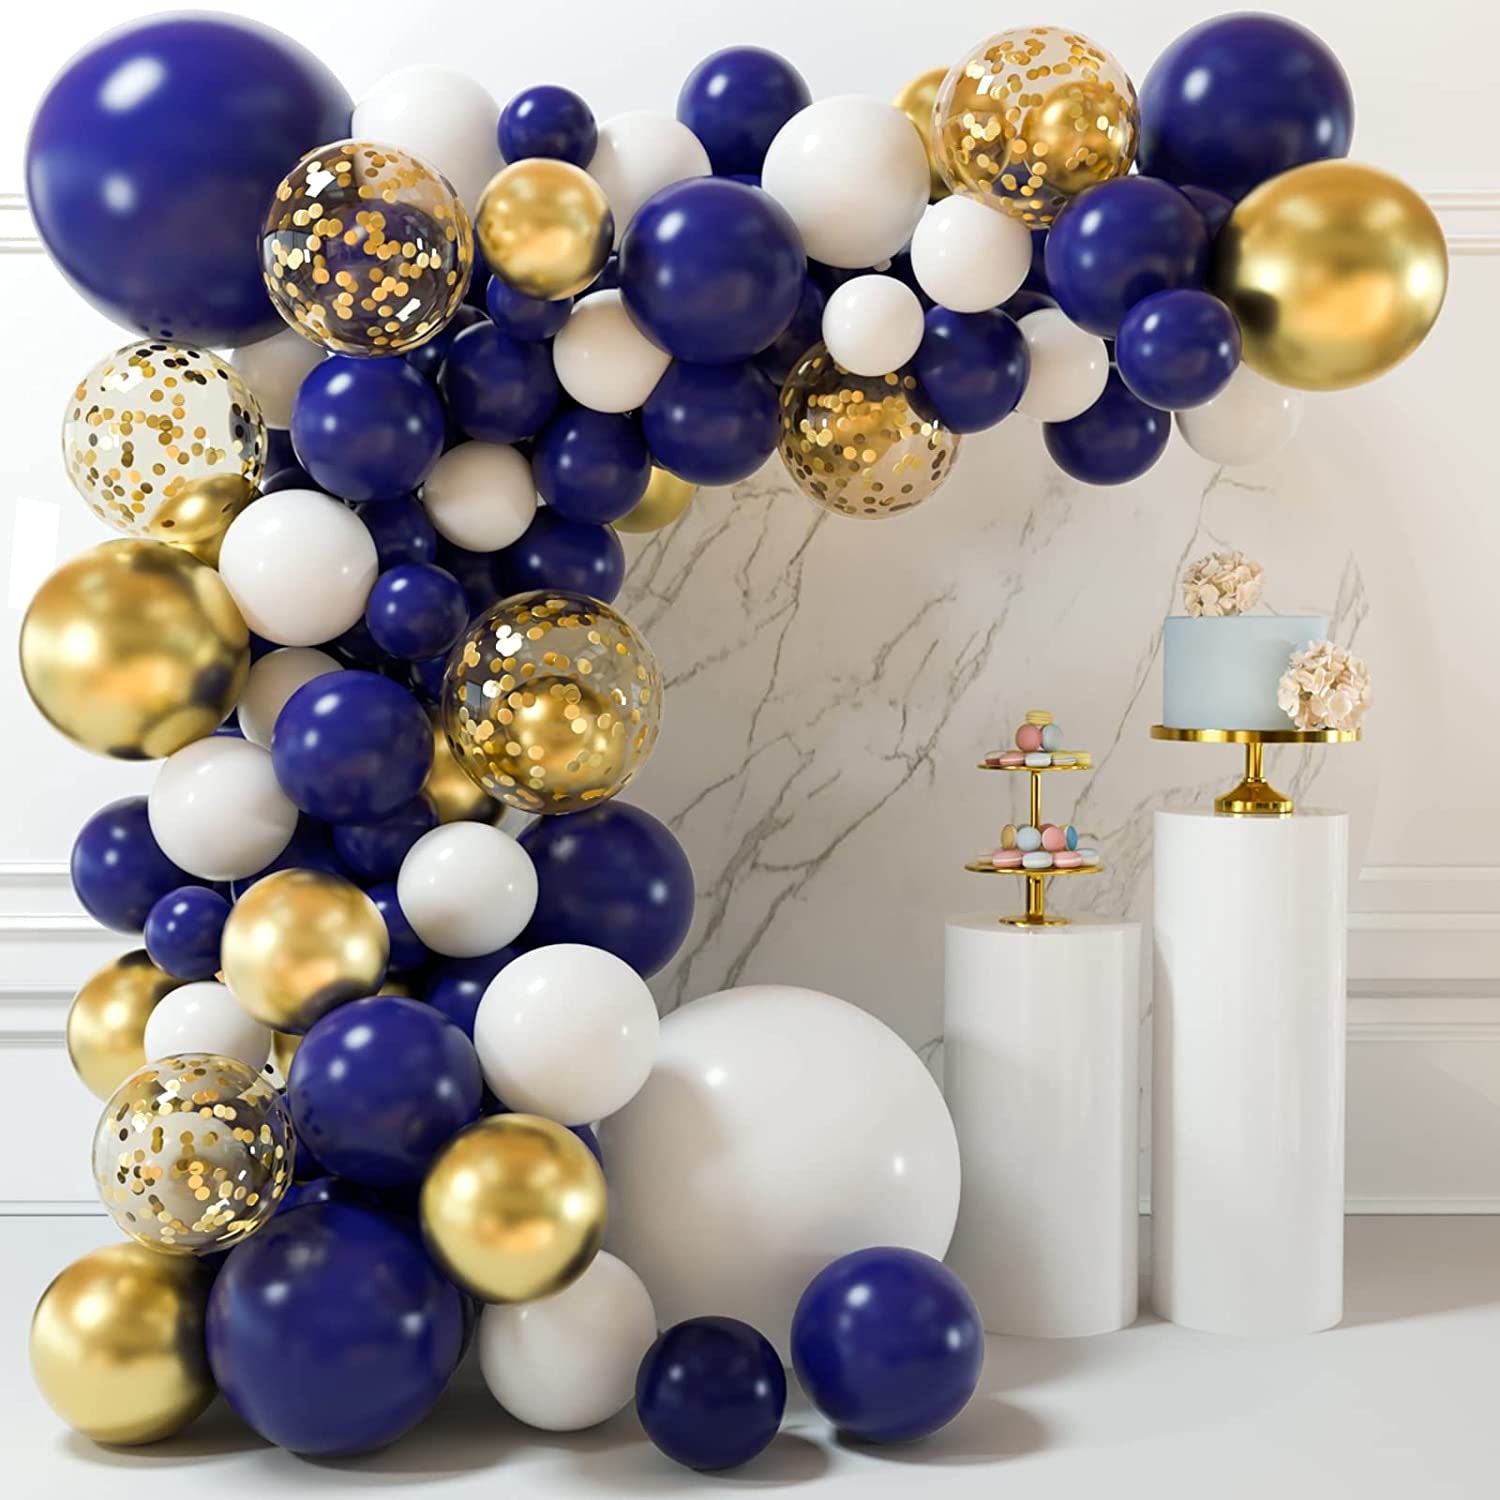 Ballons- bleu ciel-Happy birthday-Lot de 6 - Décorations Anniversaire